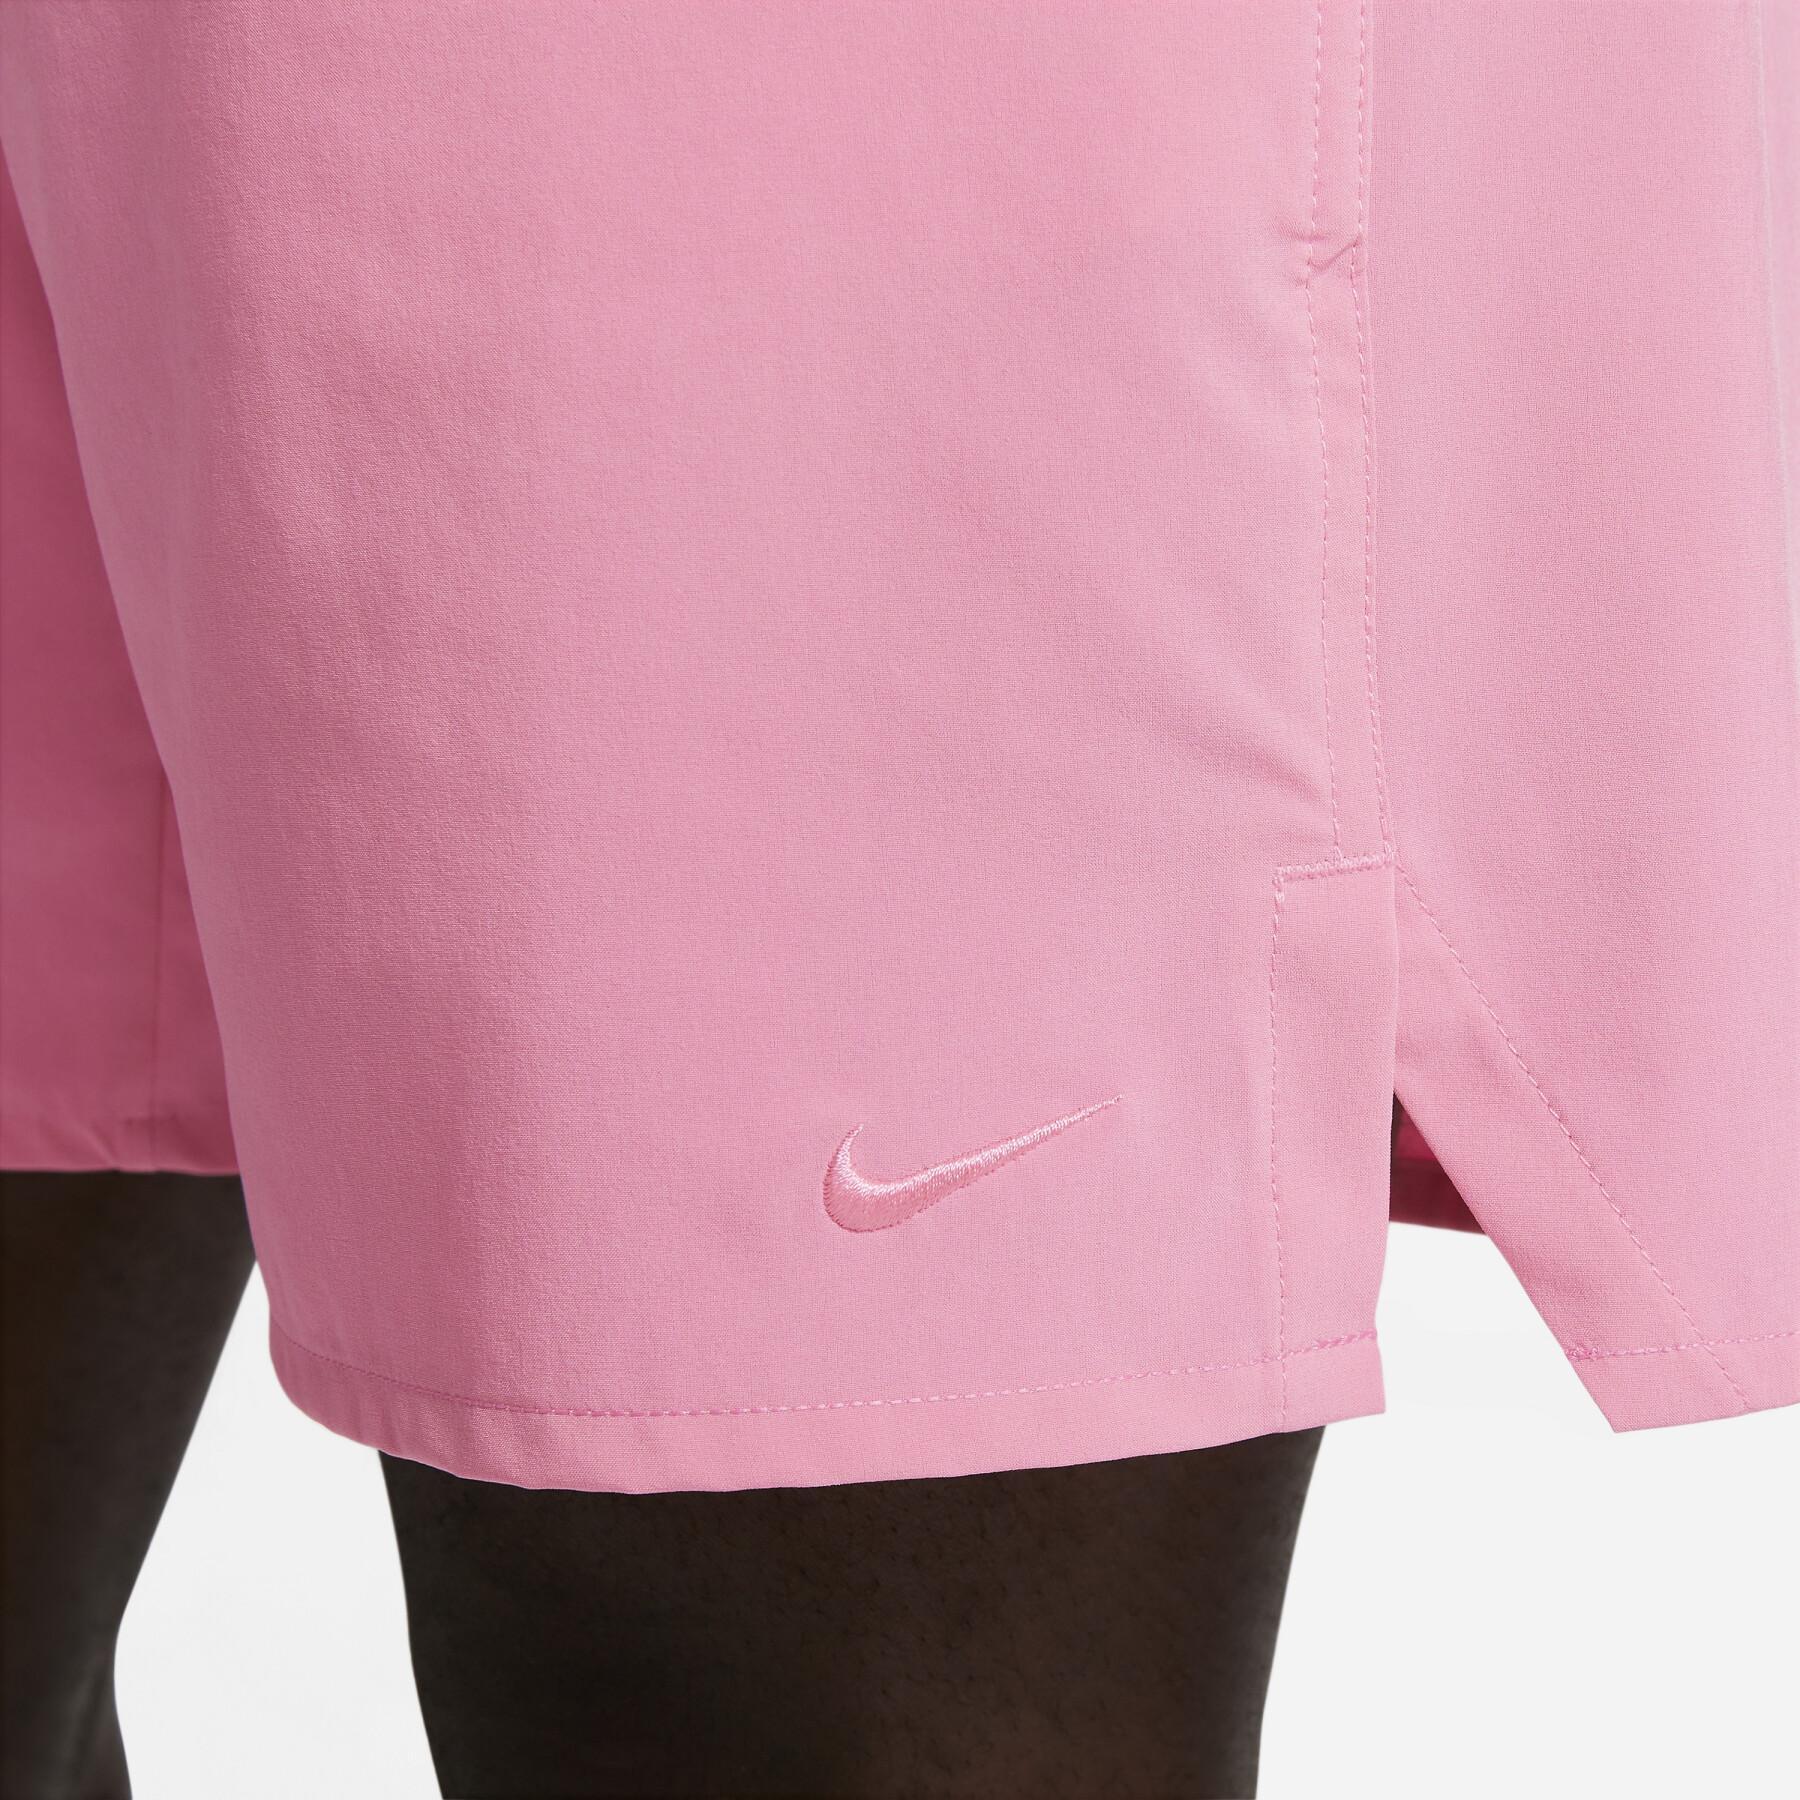 Woven shorts Nike Dri-Fit Unlimited 7 UL Dye